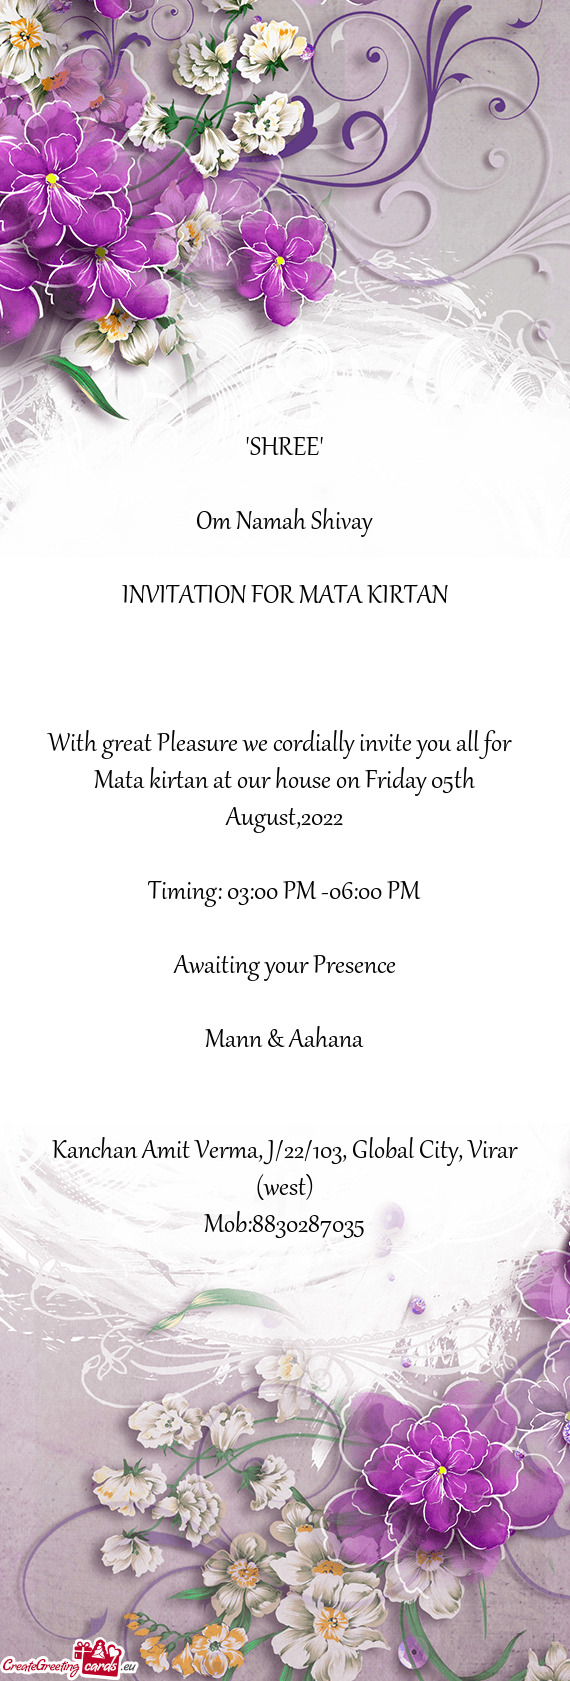 INVITATION FOR MATA KIRTAN